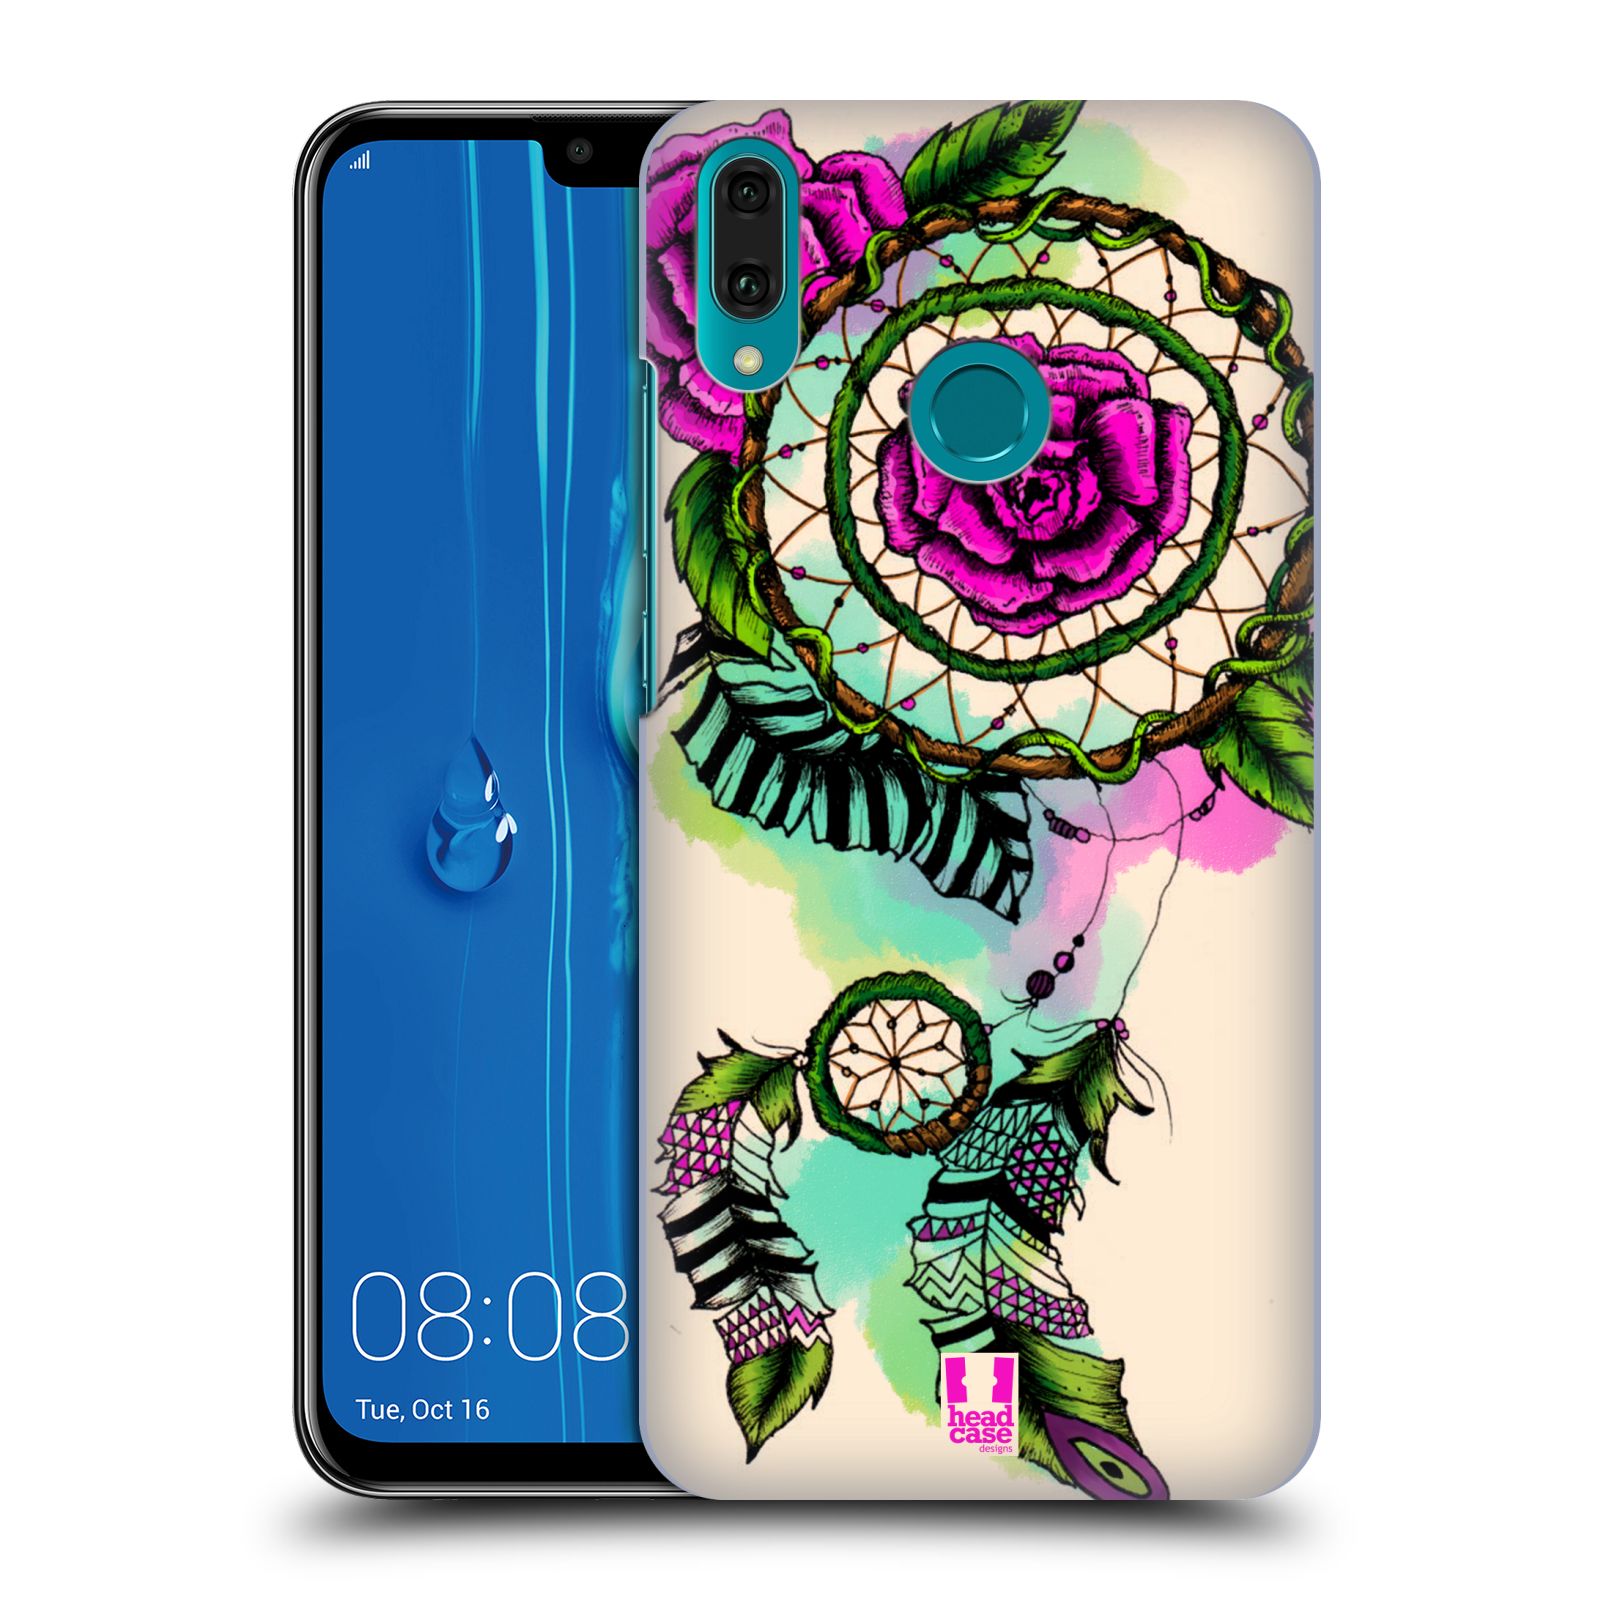 Pouzdro na mobil Huawei Y9 2019 - HEAD CASE - vzor Květy lapač snů růže